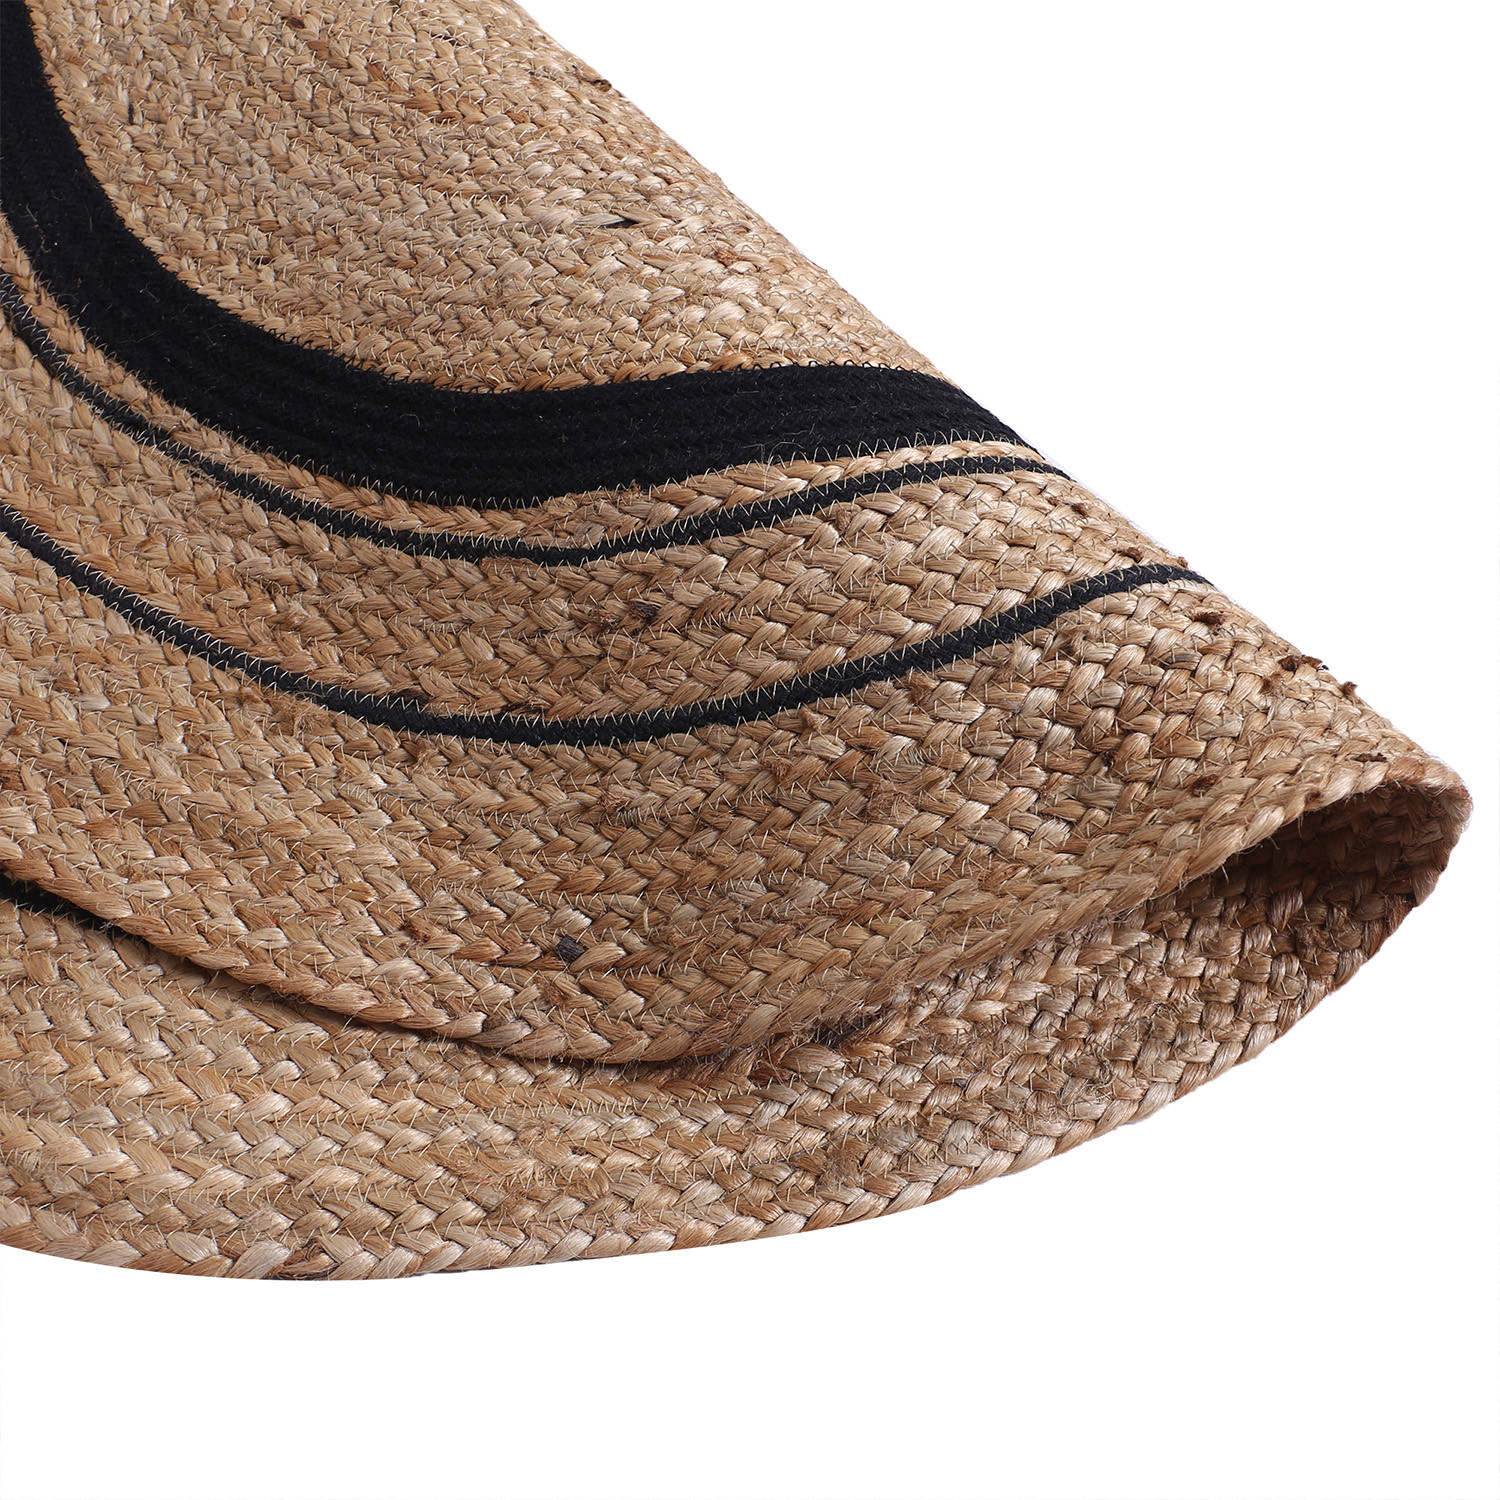 Kuber Industries Handmade Carpet|Cotton Circular Shape Black Layer Door Mat|Jute Floor Rug Mat For Meditation,Living Room,Dining Room & Home Décor,62x62 cm,(Brown)